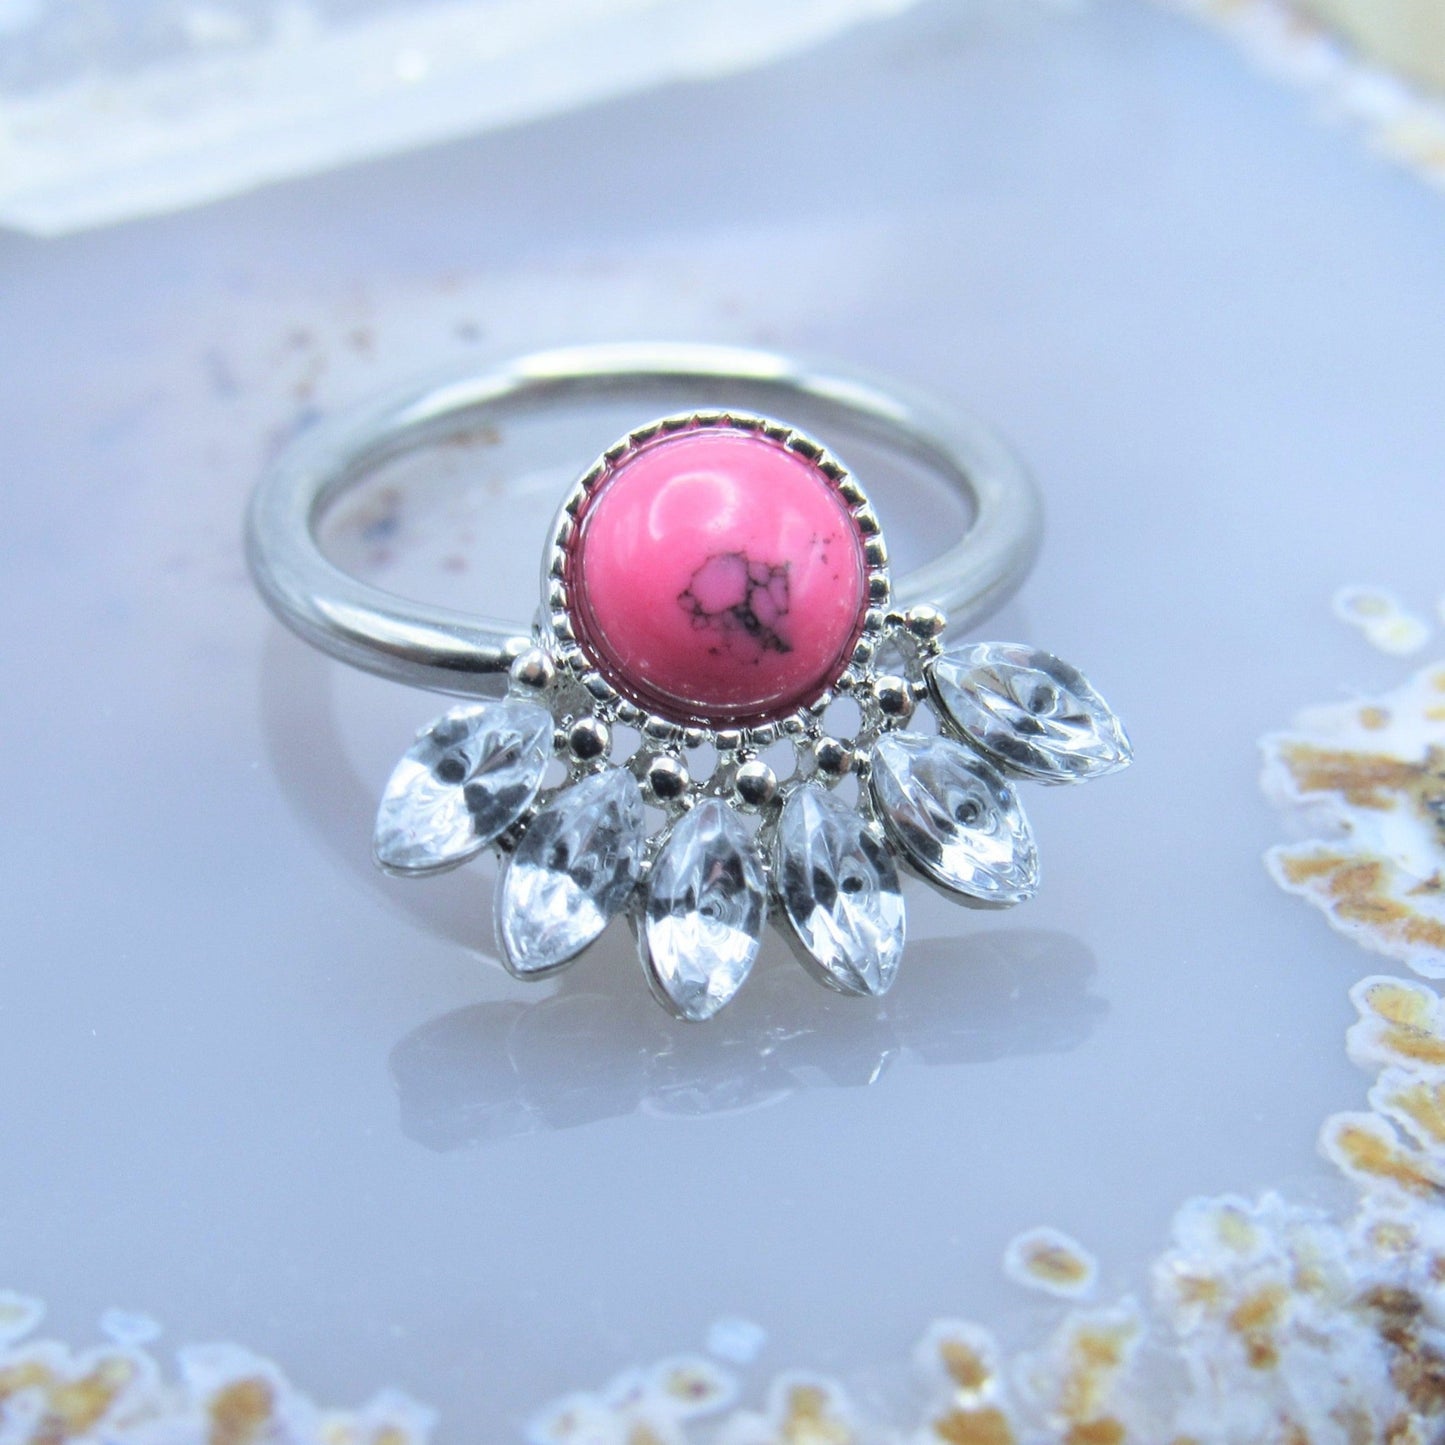 Decorative captive bead ring hoop 14g 1/2" press fit cz gemstones pink howlite stone conch ear piercing ring - Siren Body Jewelry